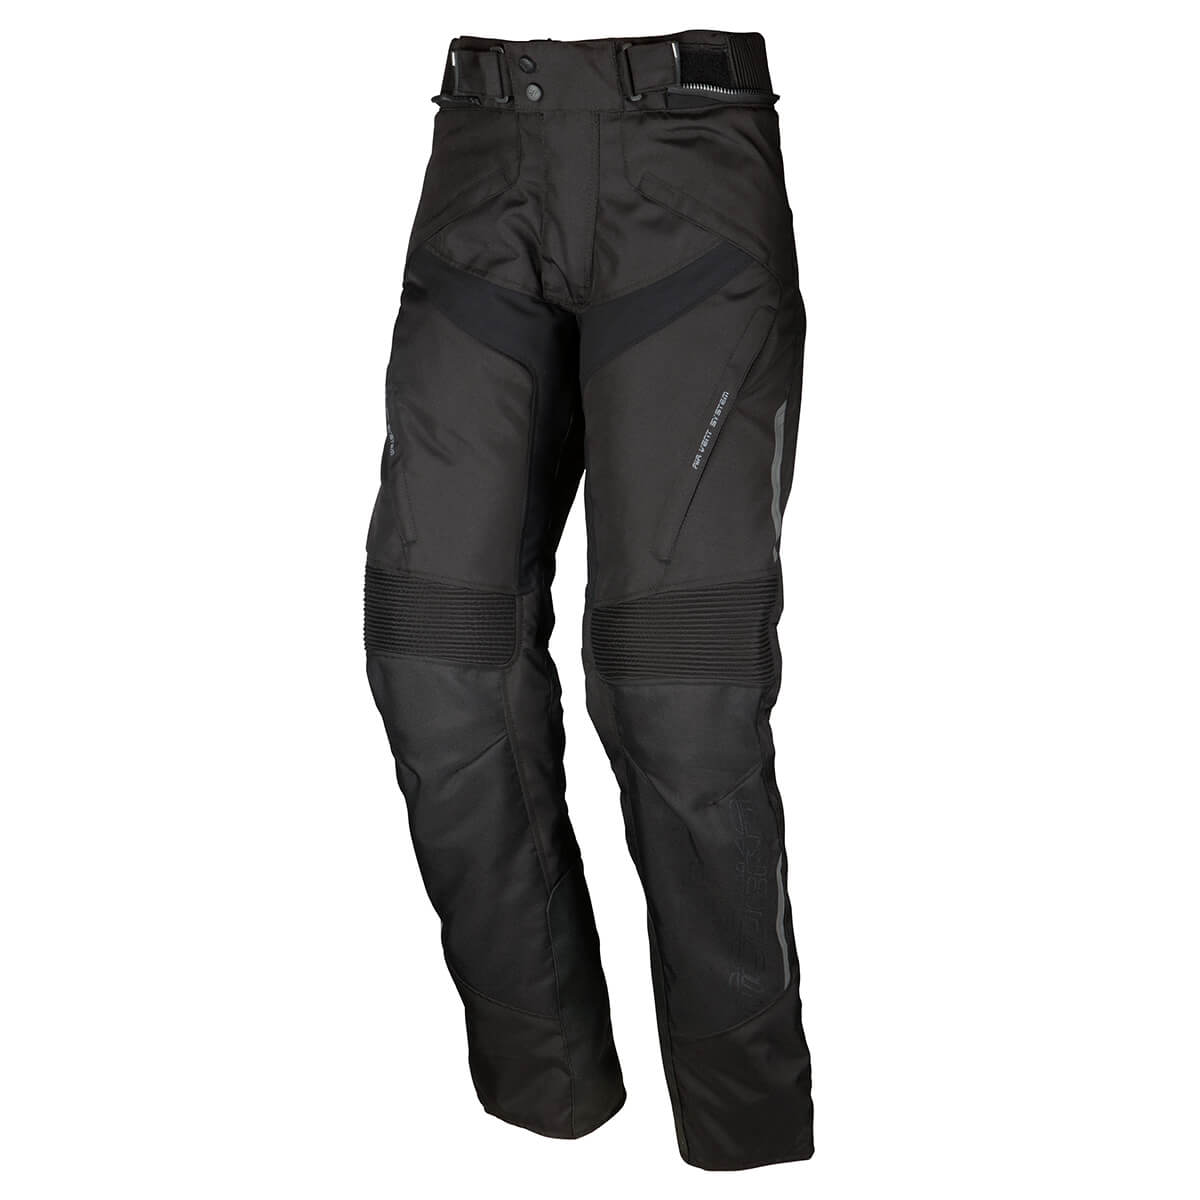 Image of Modeka Clonic Trousers Black Size 2XL ID 4045765163108